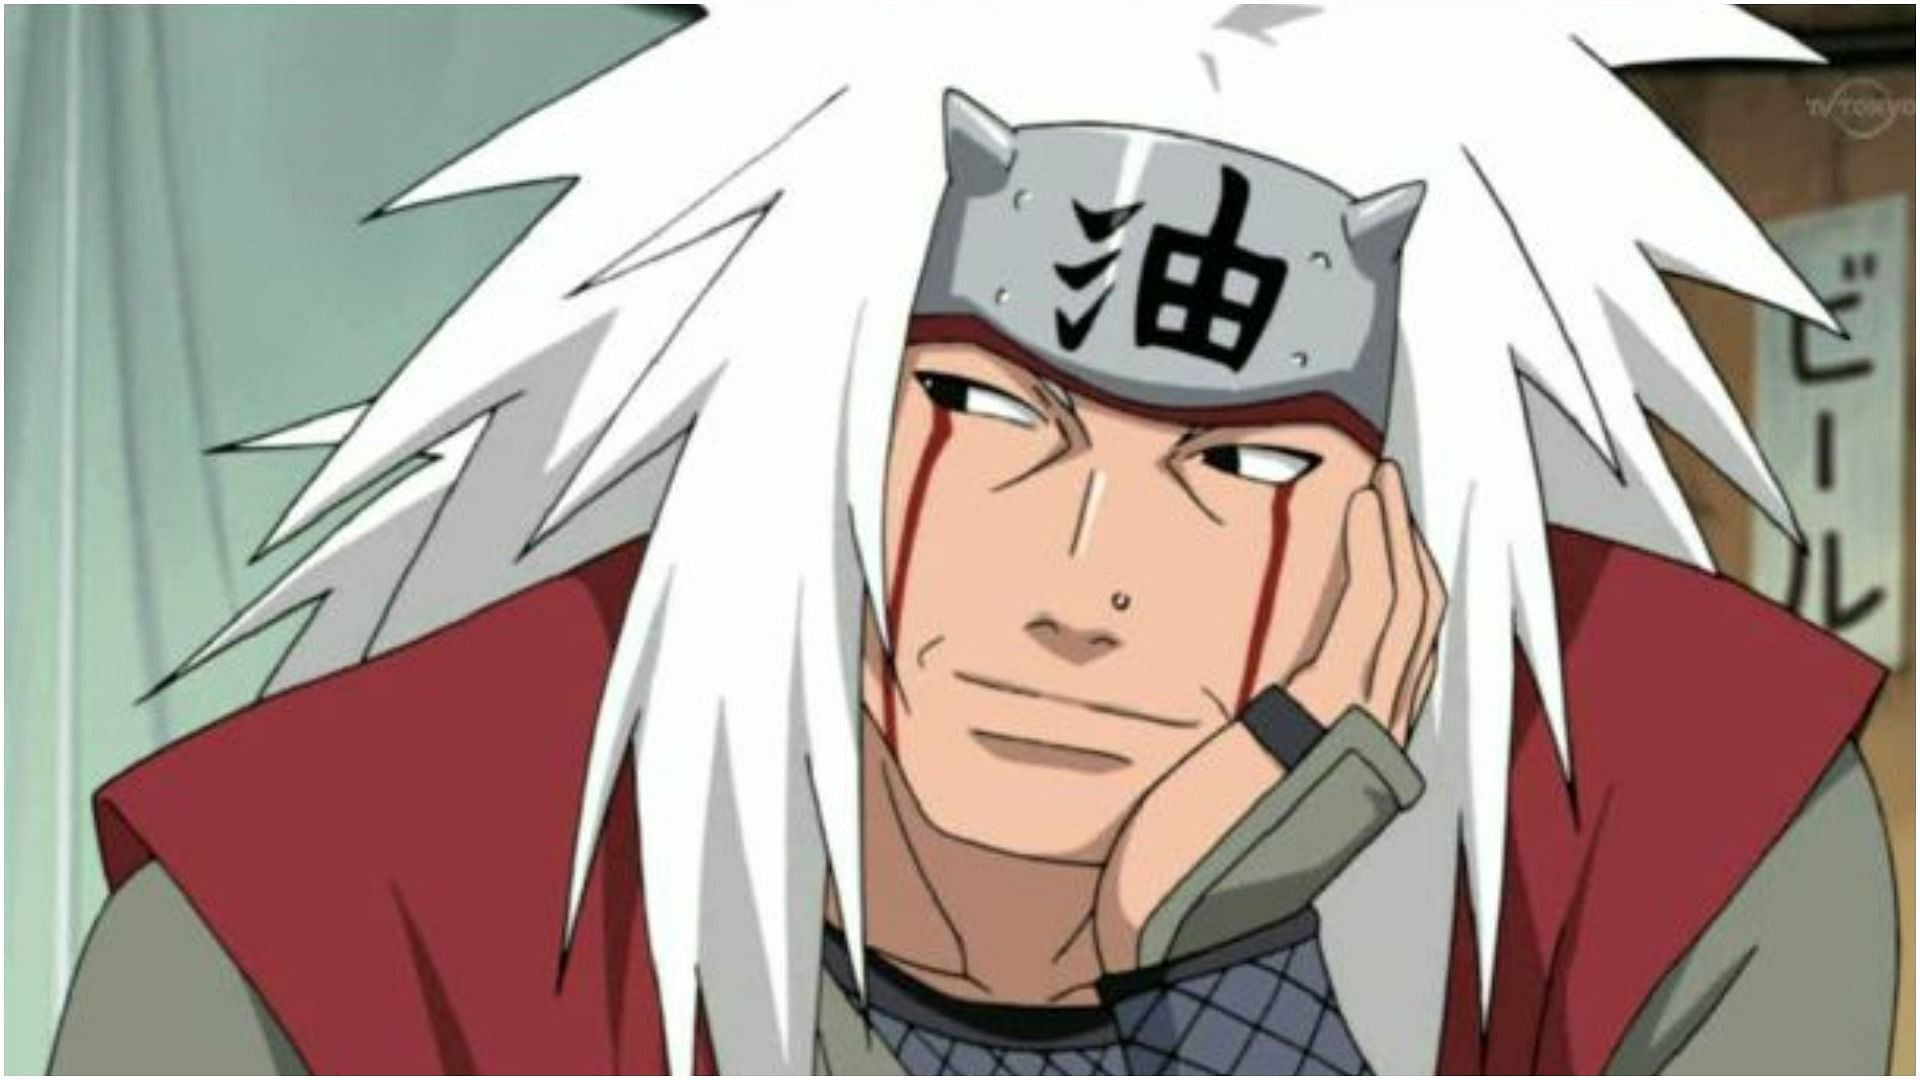 Jiraiya as seen in the anime Naruto (Image via Studio Pierrot)